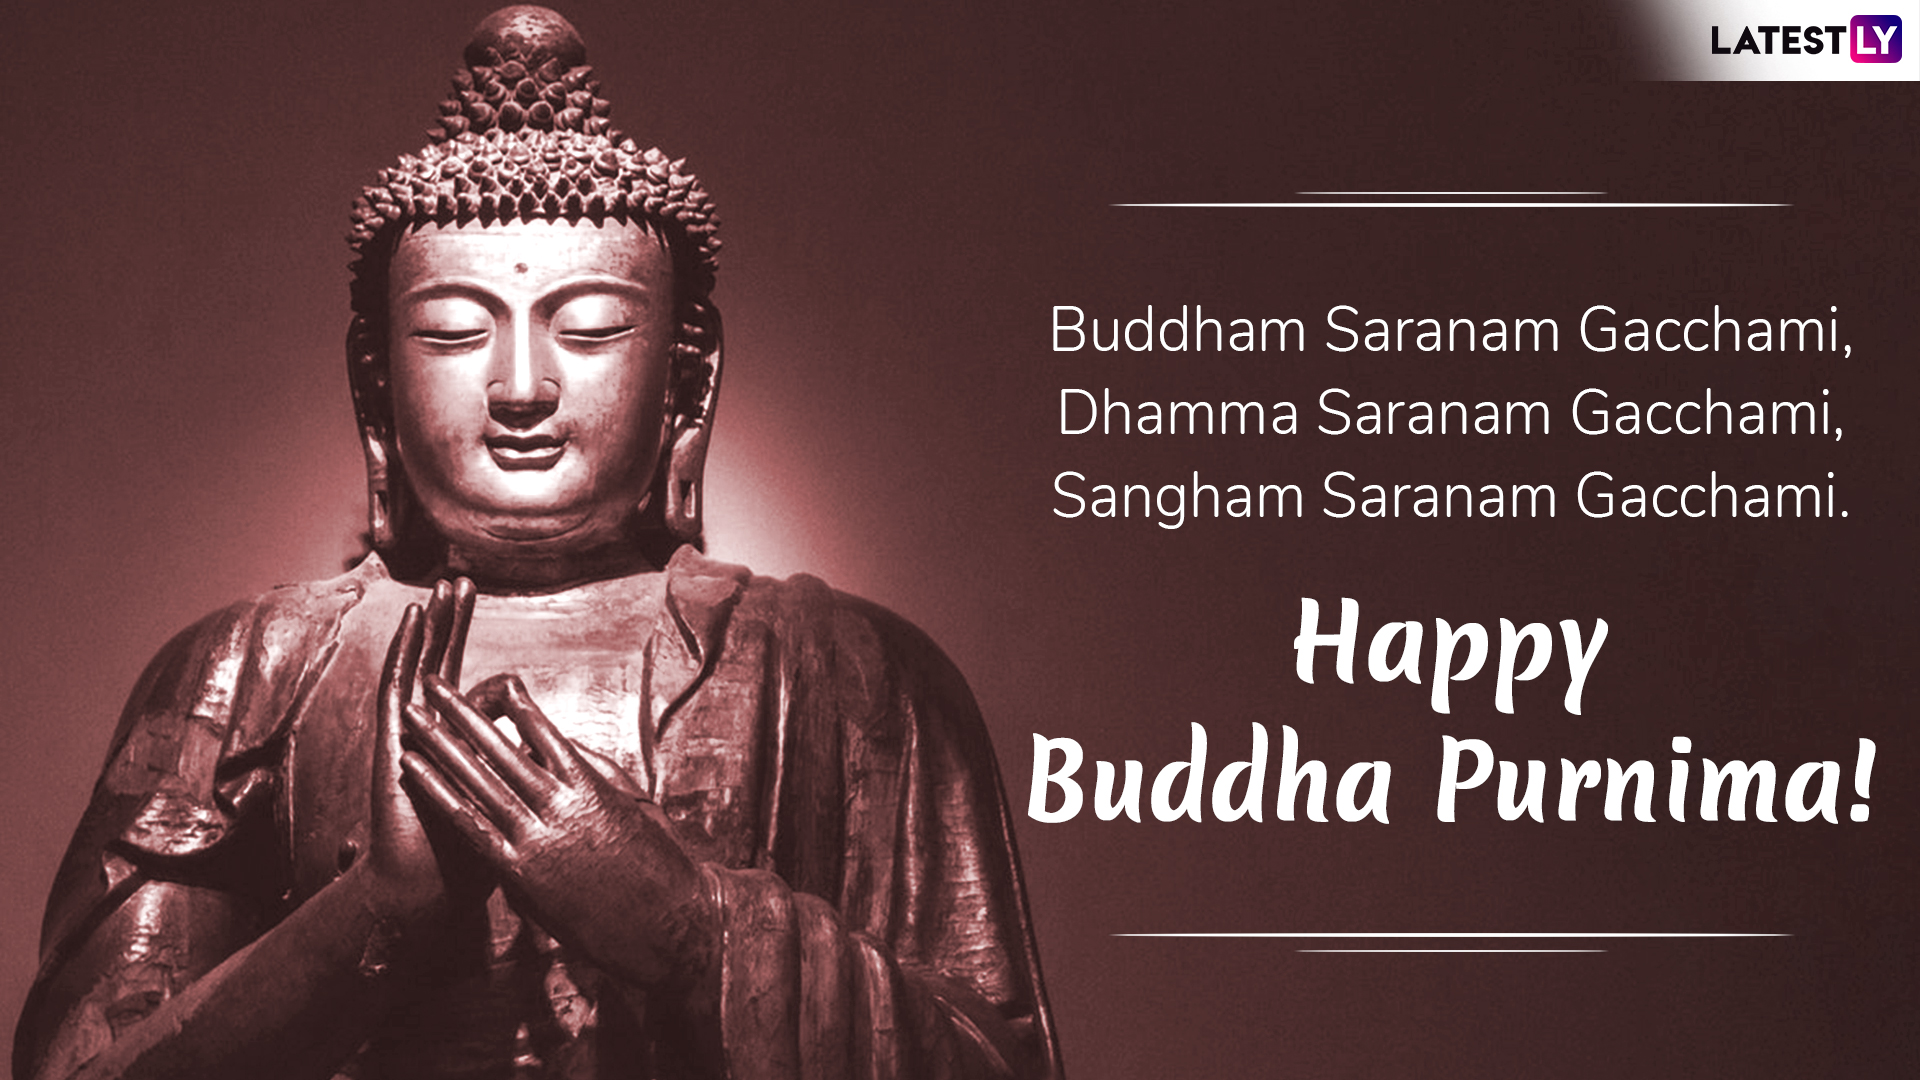 Happy Buddha Jayanti 2019 Greetings: WhatsApp Stickers, GIF Images